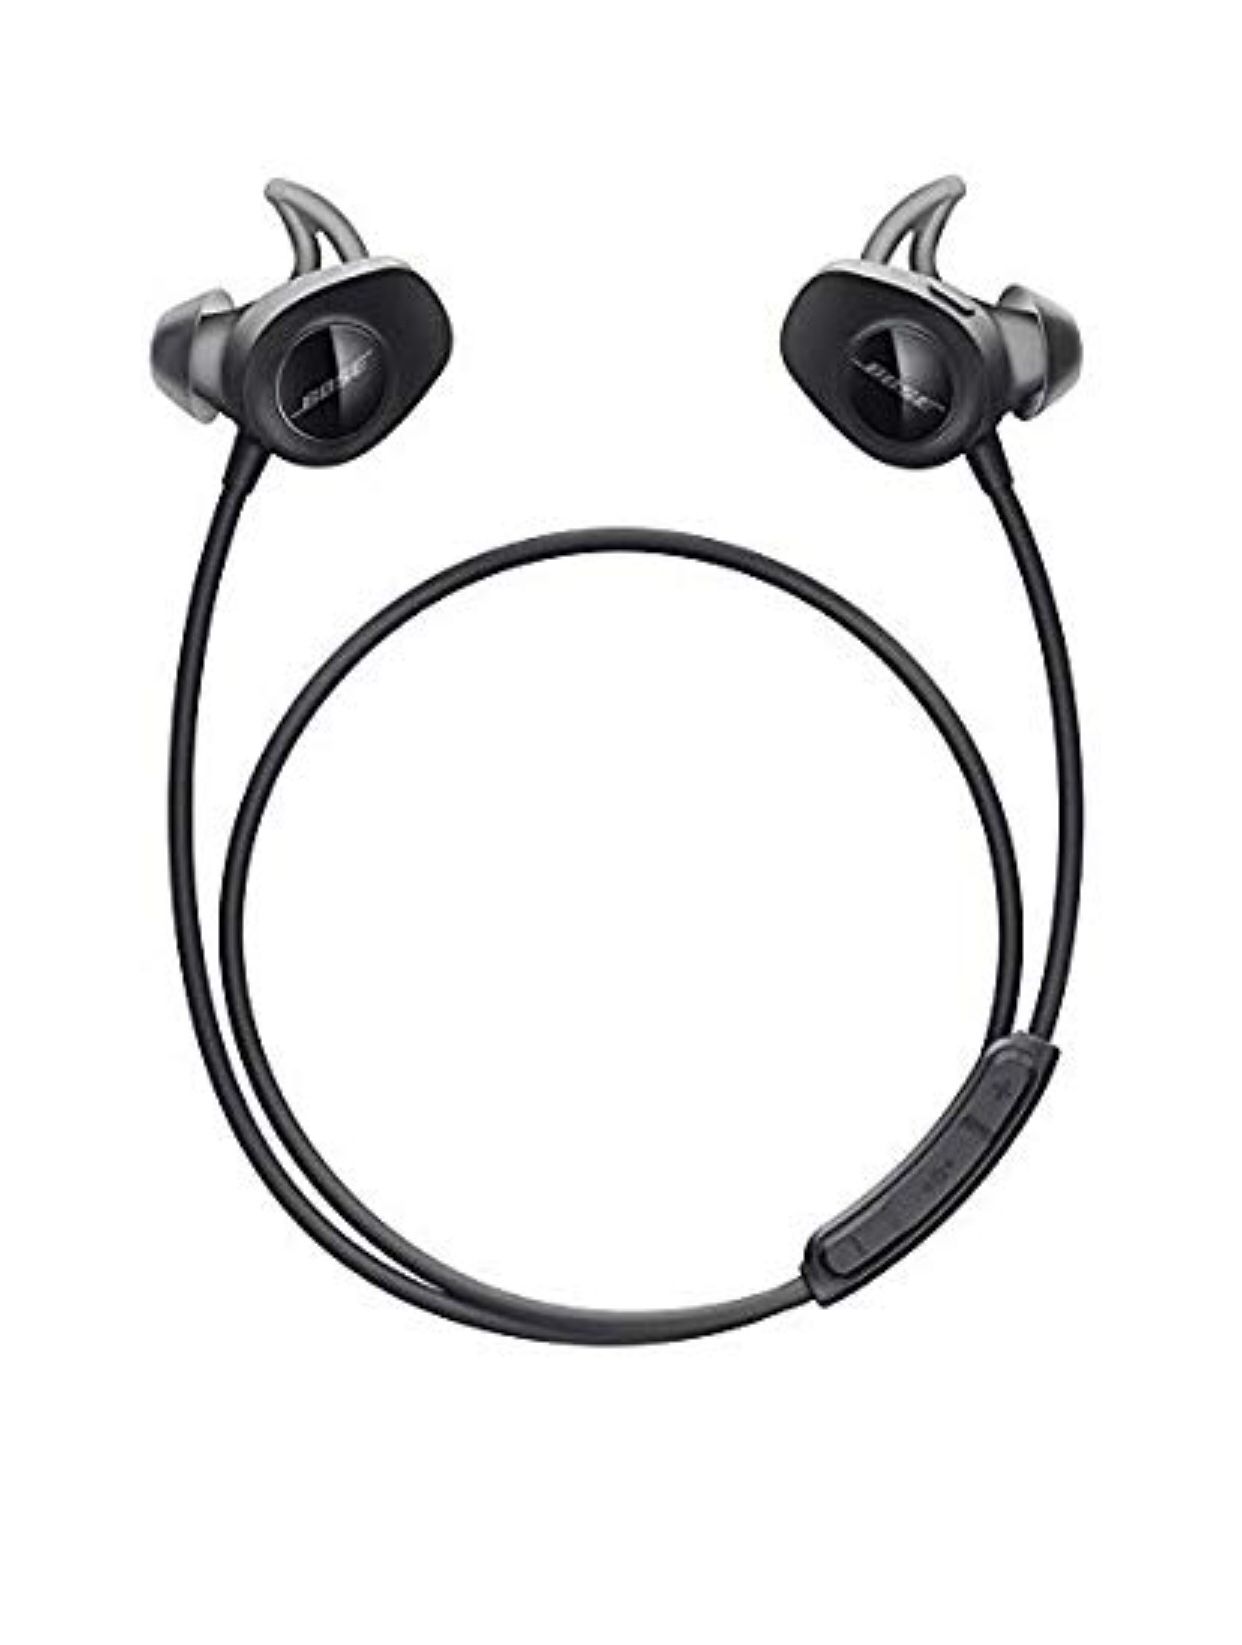 Bluetooth Sound-sport Earbuds BOSE